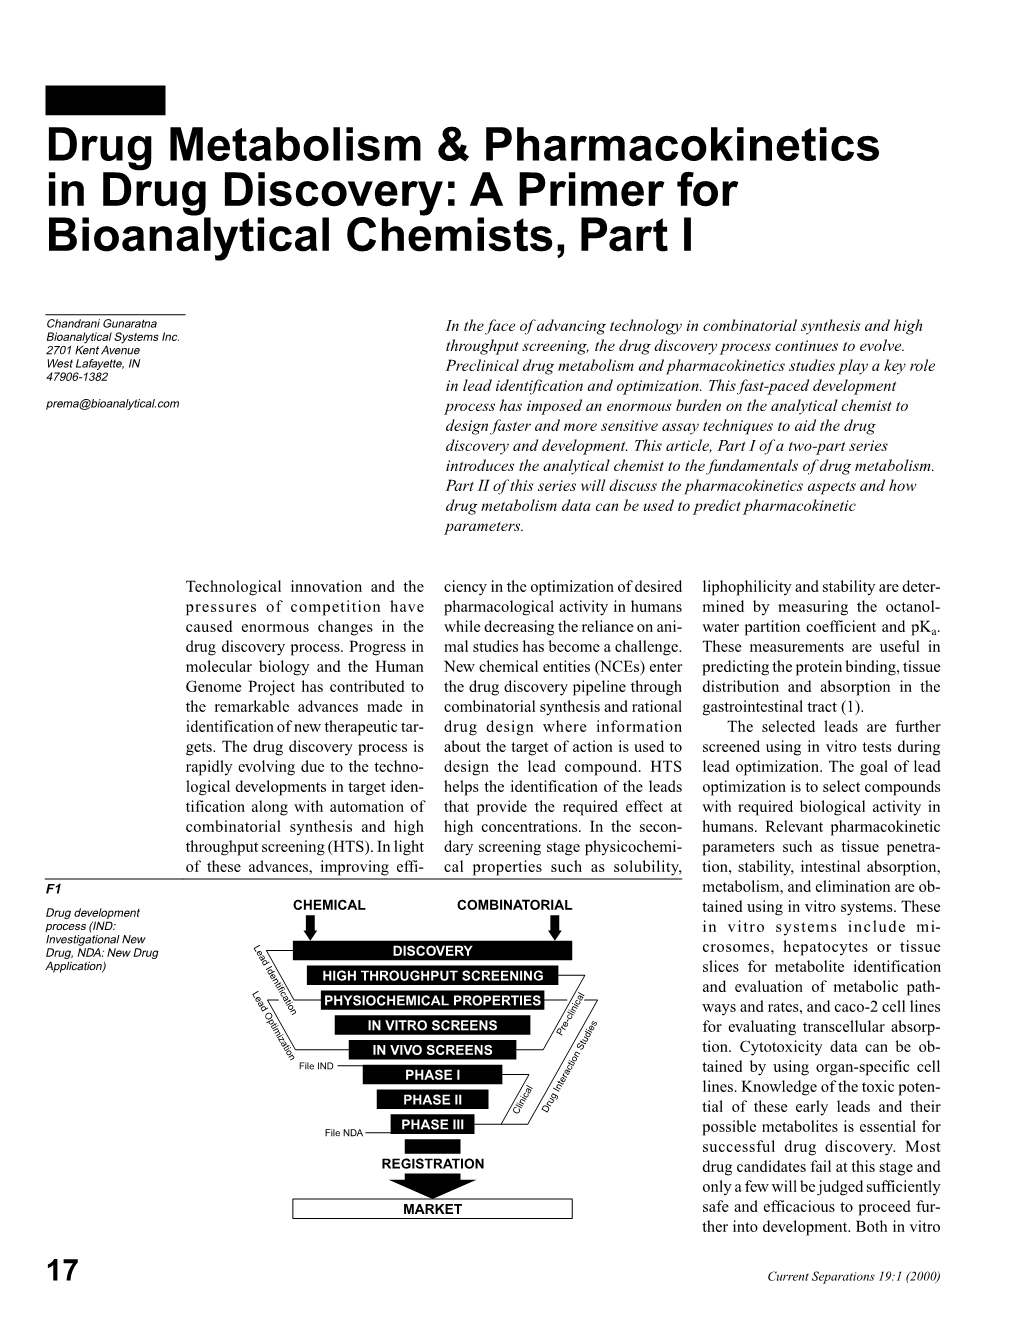 Drug Metabolism & Pharmacokinetics in Drug Discovery